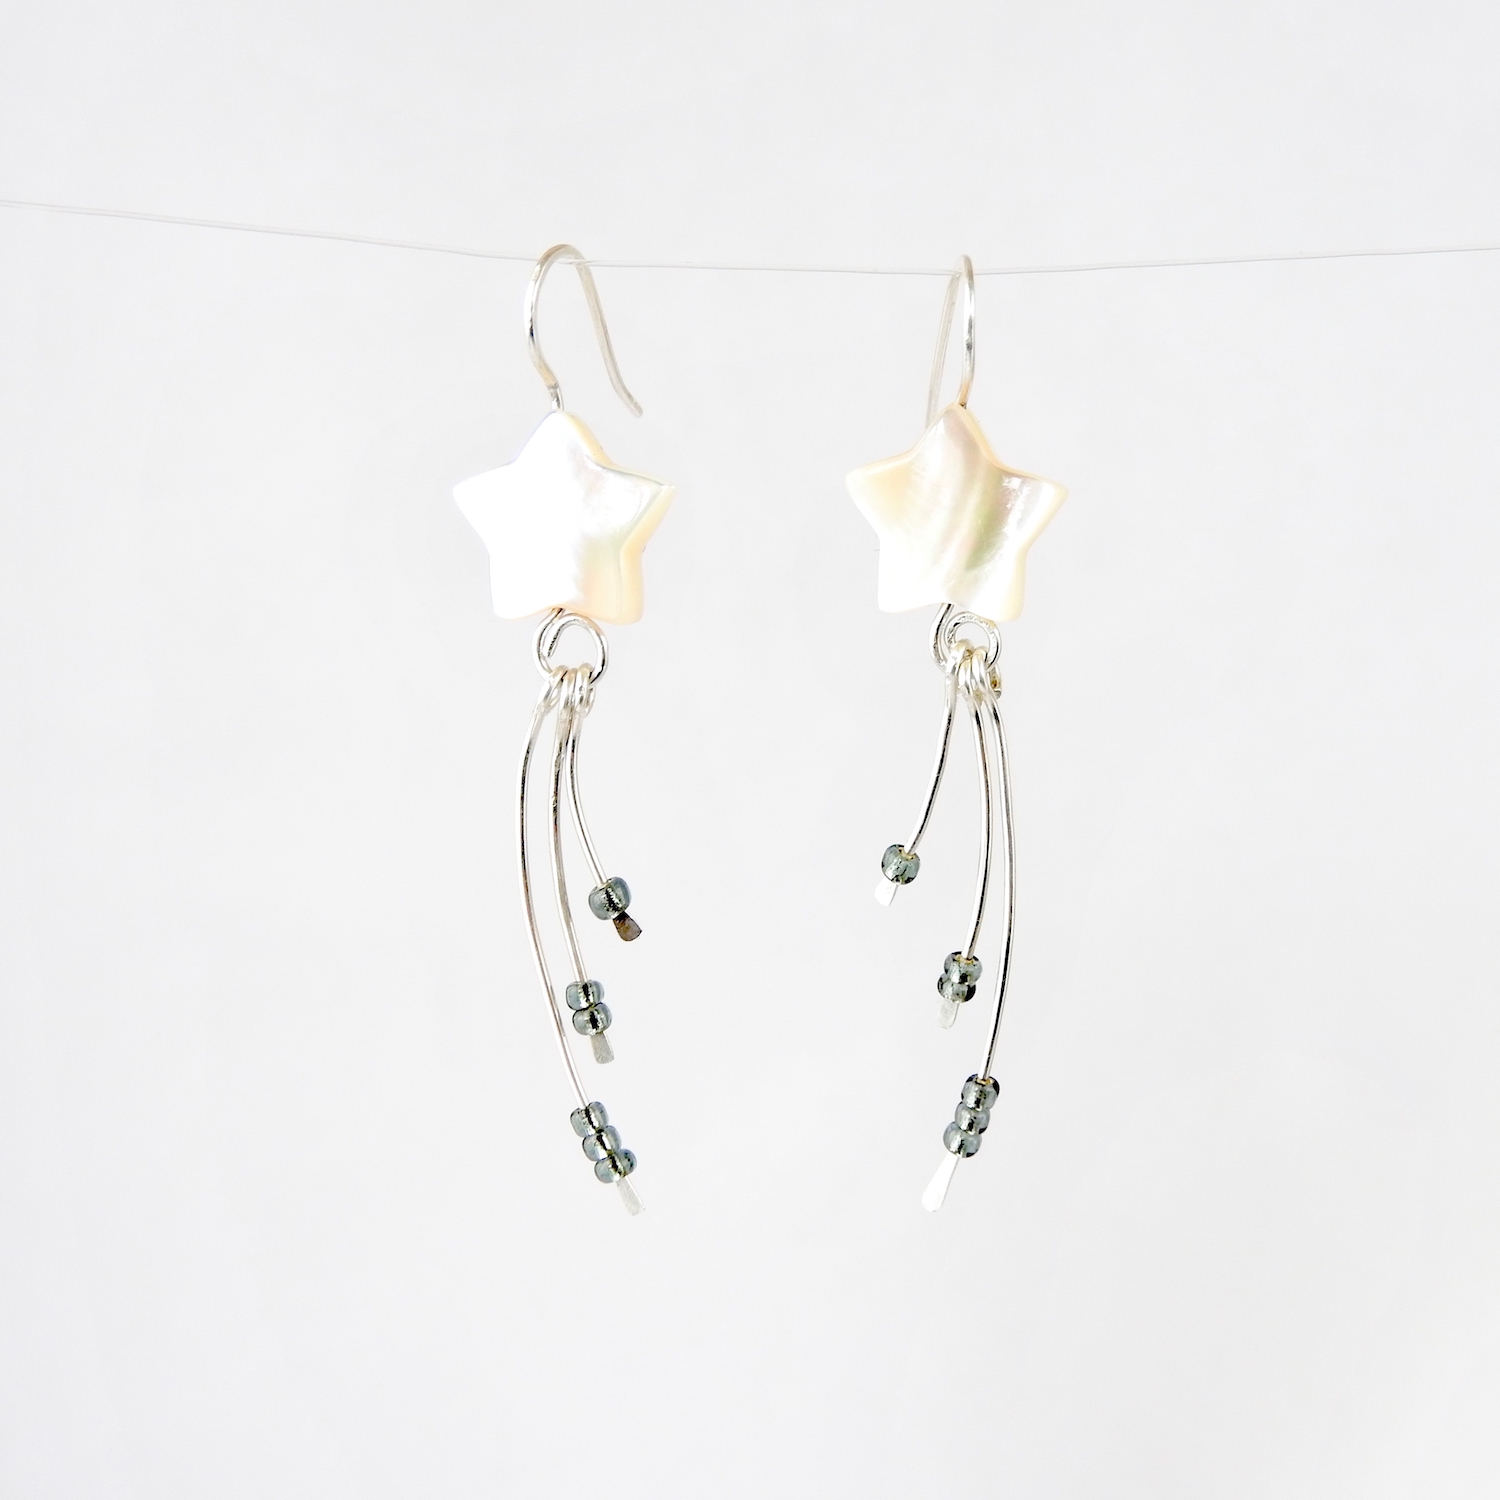 Wishing Star Eco Earrings against white background